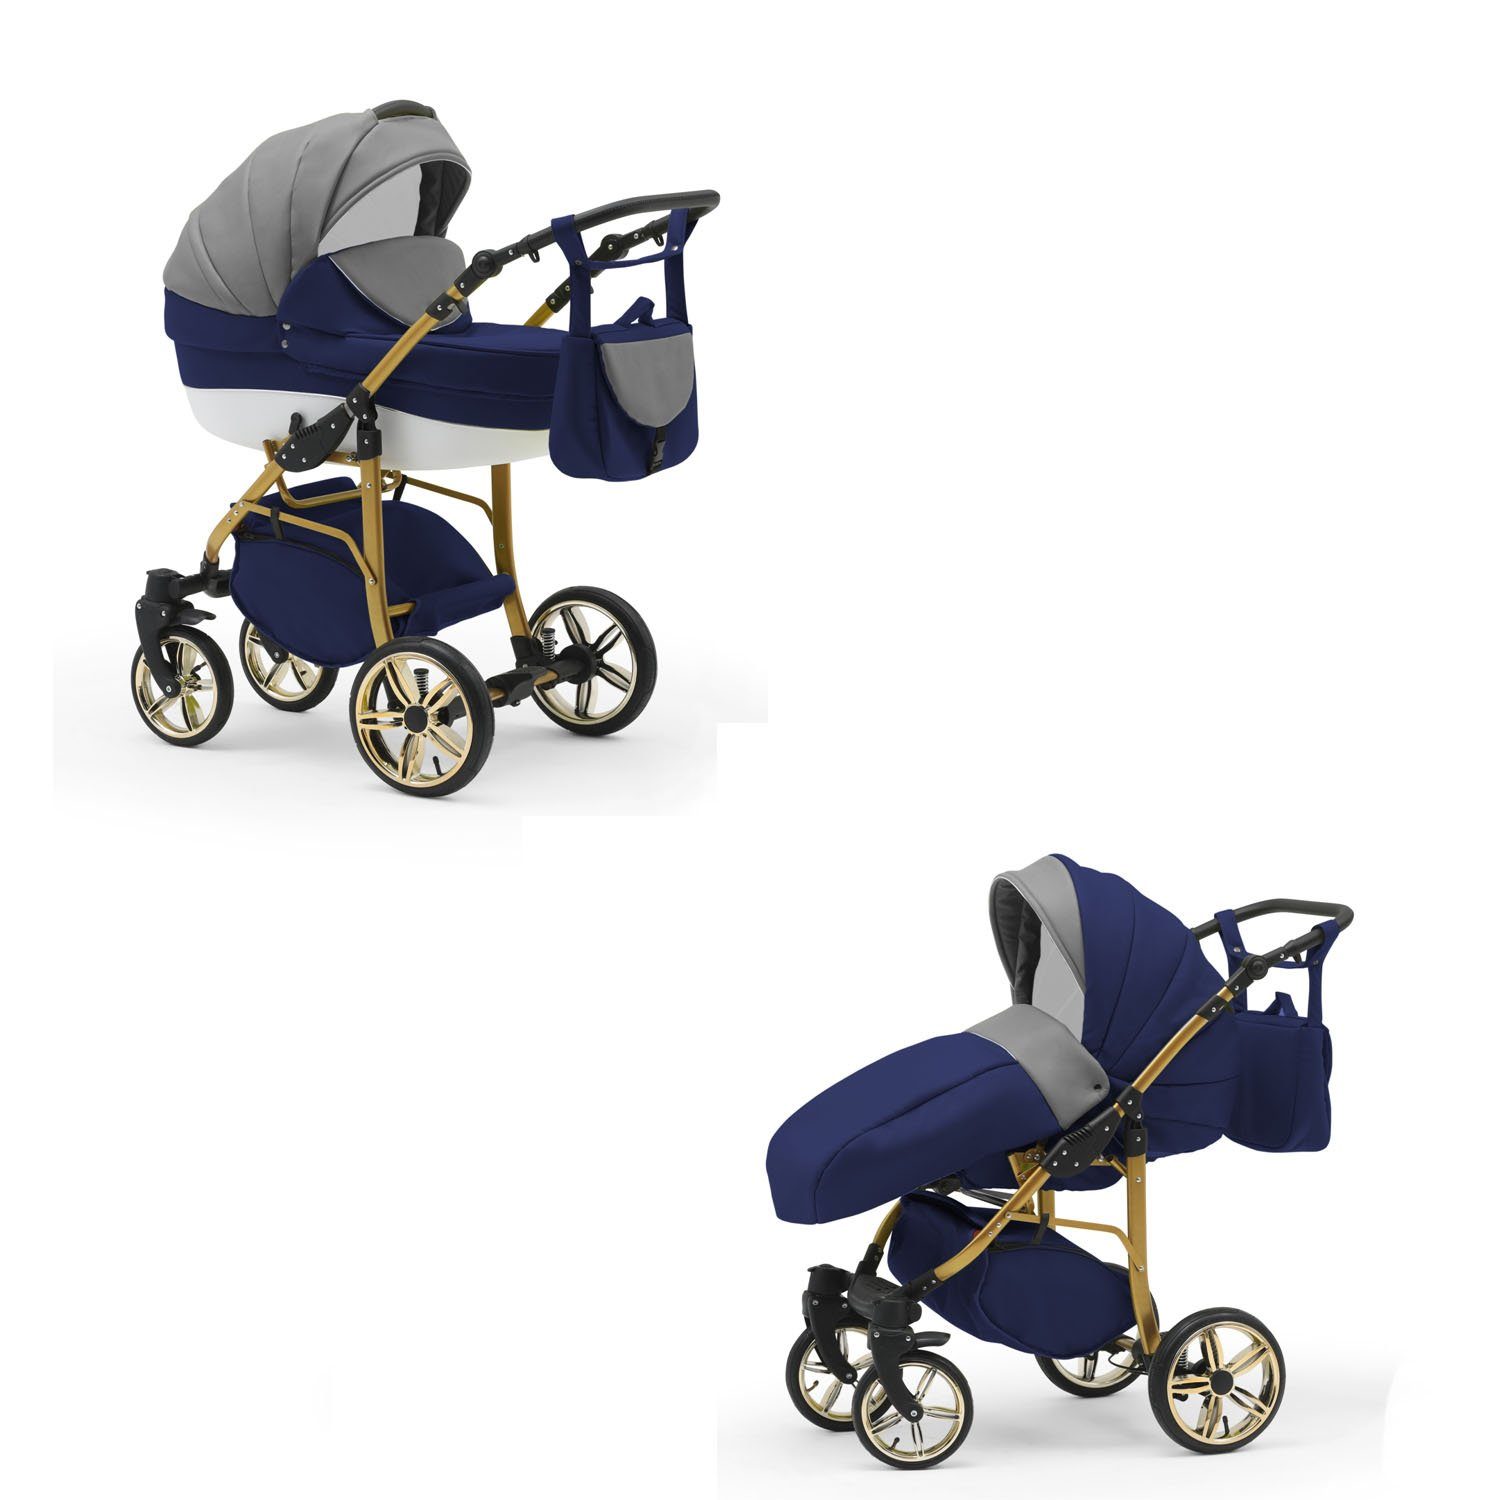 babies-on-wheels Kombi-Kinderwagen 2 46 in 13 Gold - 1 - Grau-Navy-Weiß Teile Cosmo in Farben Kinderwagen-Set